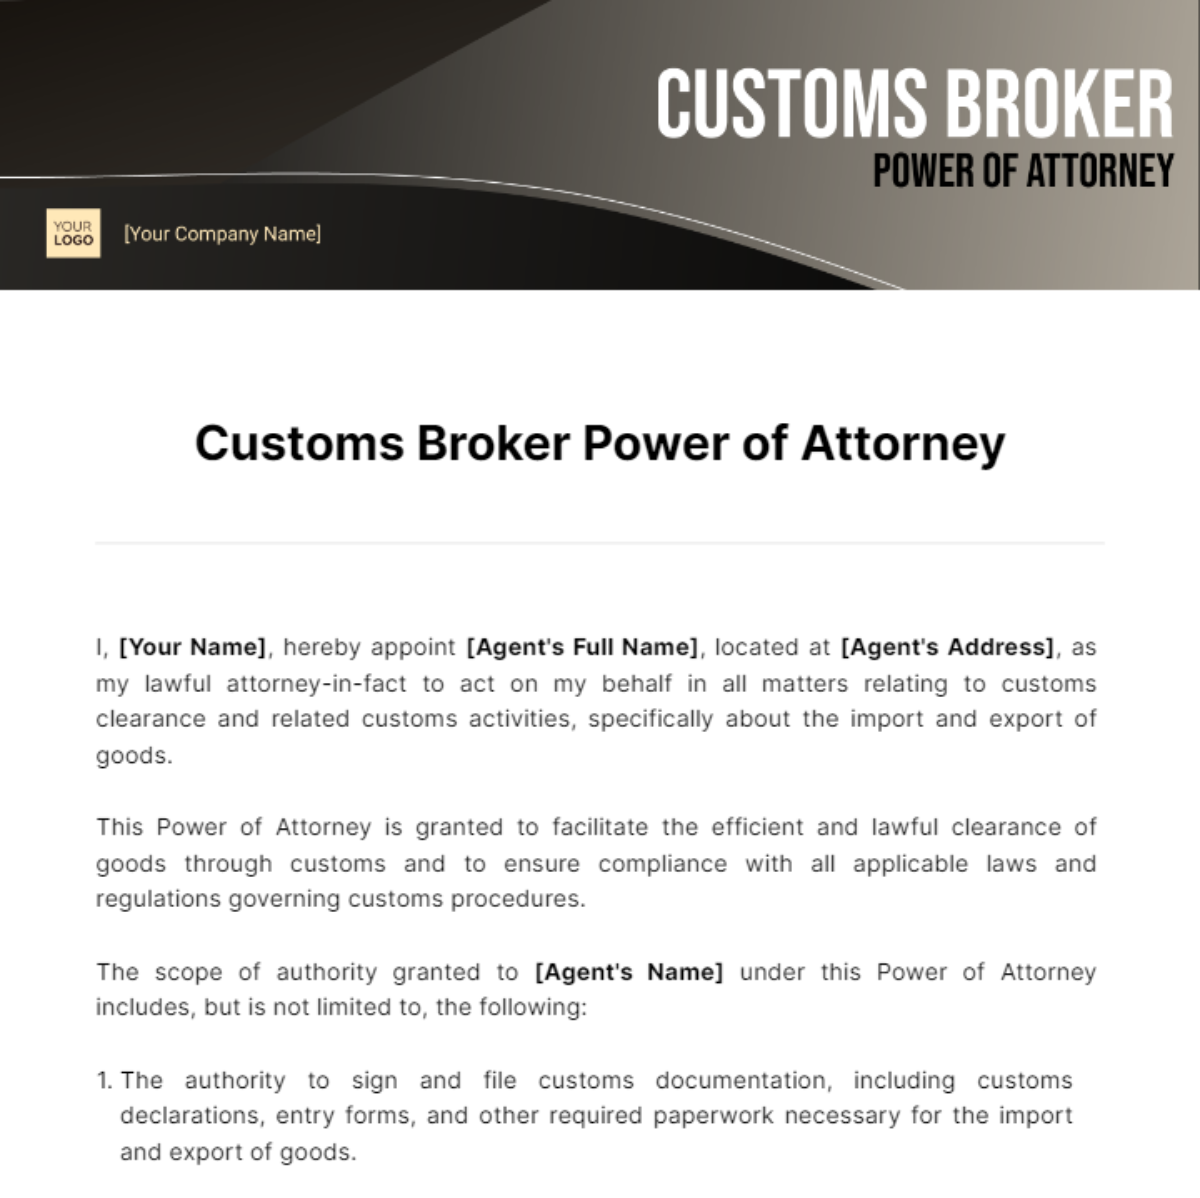 Customs Broker Power of Attorney Template